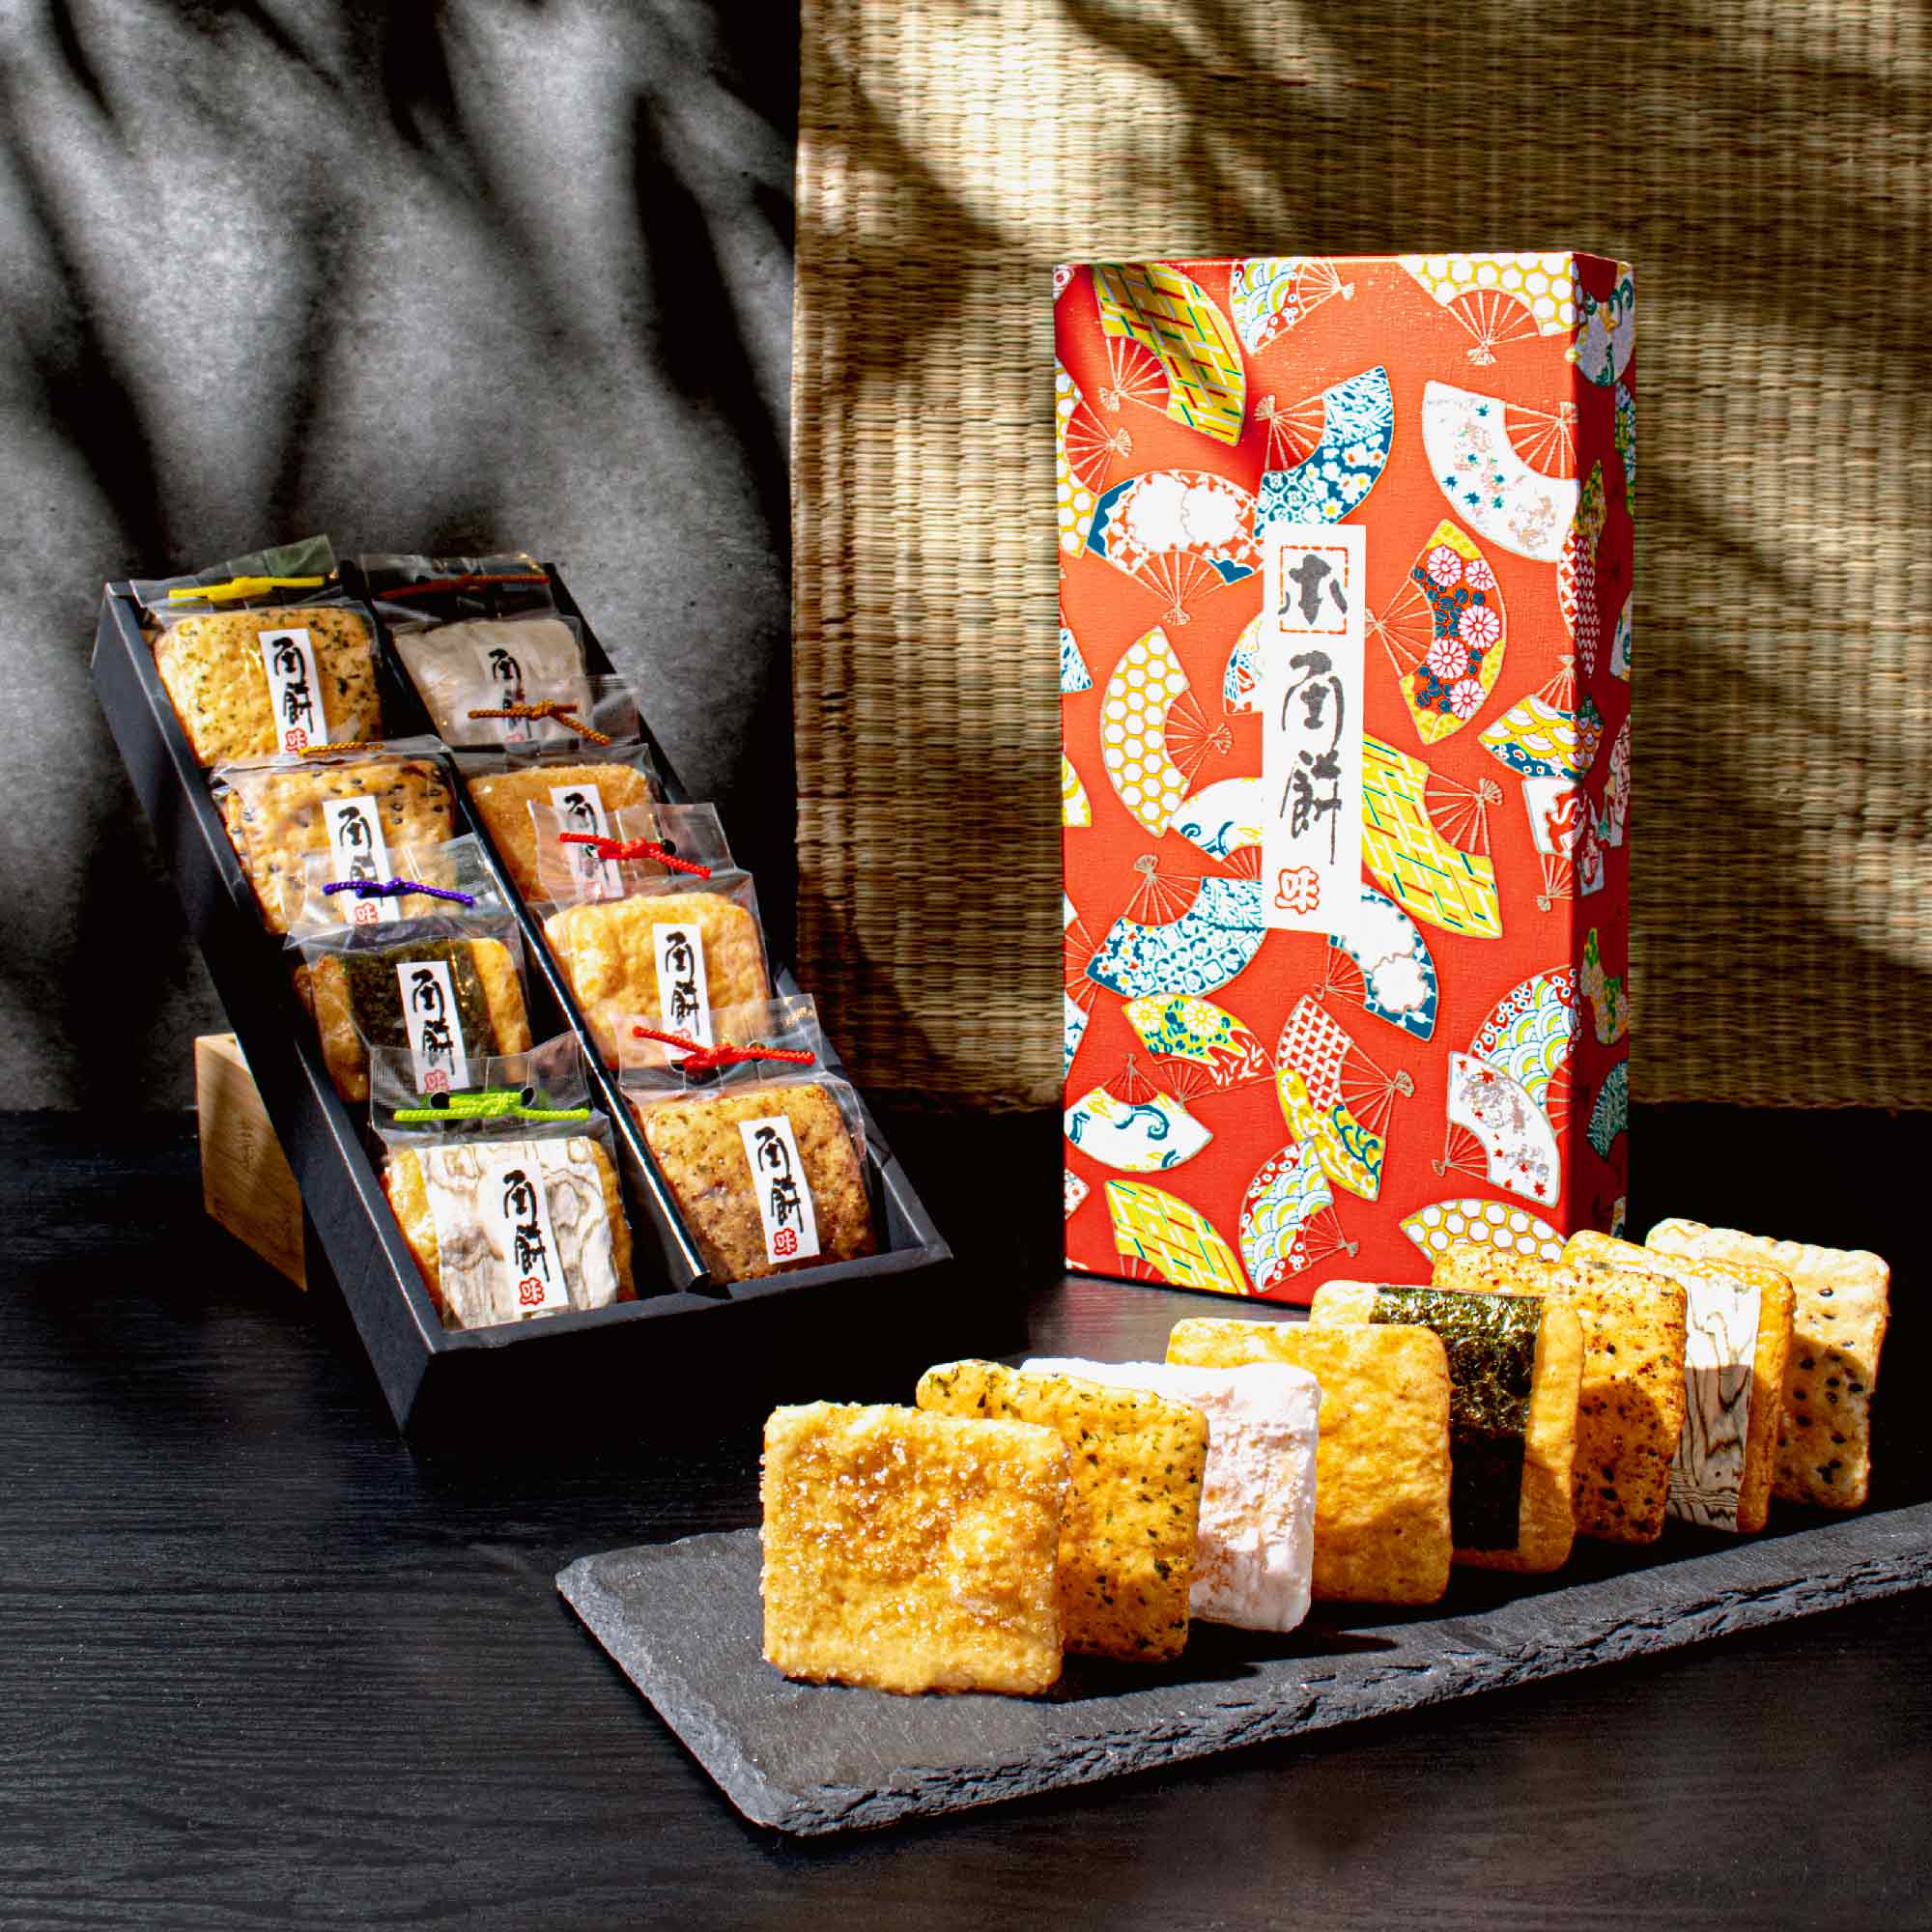 DREAMZ Square Polished sivakasi crackers gift box, Feature : Colorful  Printed at Rs 90 / Box in Virudhunagar